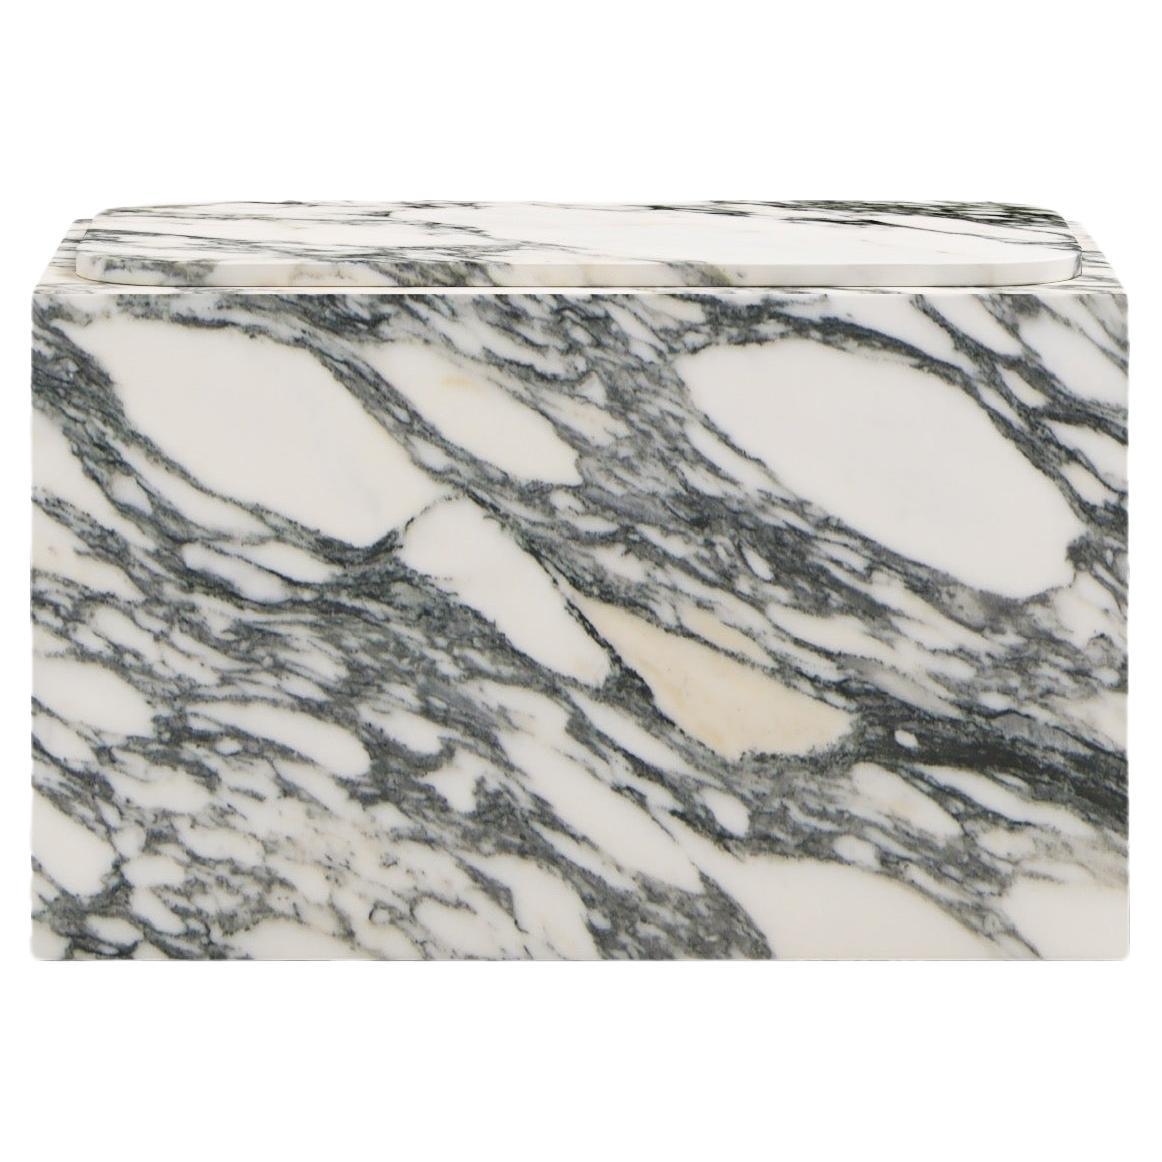 FORM(LA) Cubo Rectangle Side Table 30”L x 16"W x 19”H Arabescato Corchia Marble For Sale